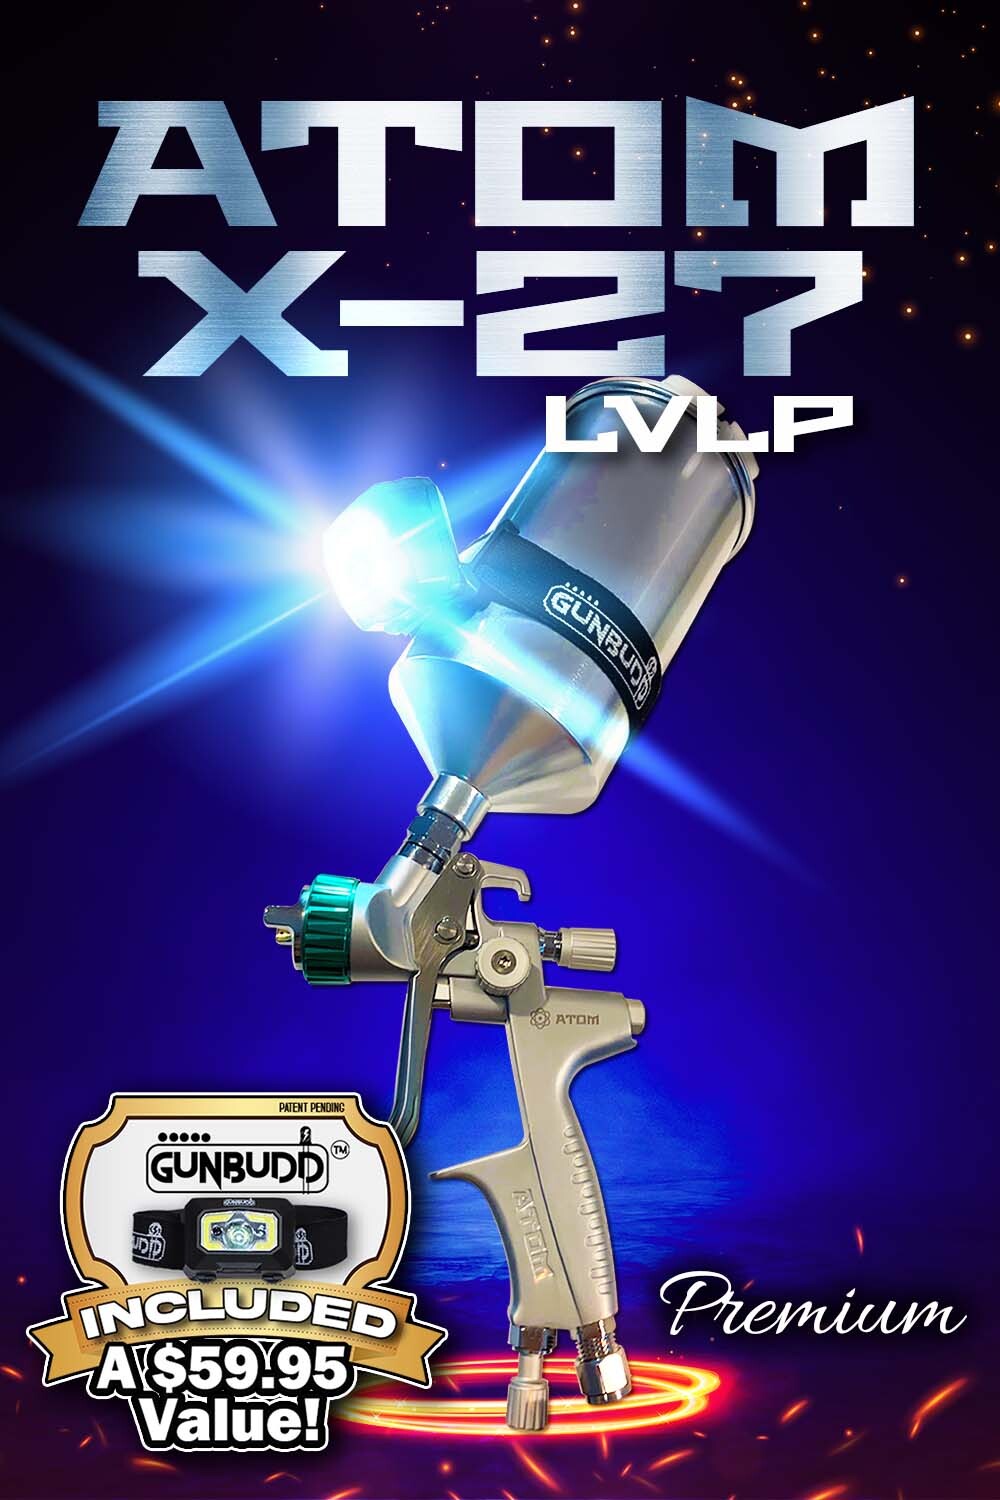 Top 10 Best LVLP Spray Guns Review in 2023 